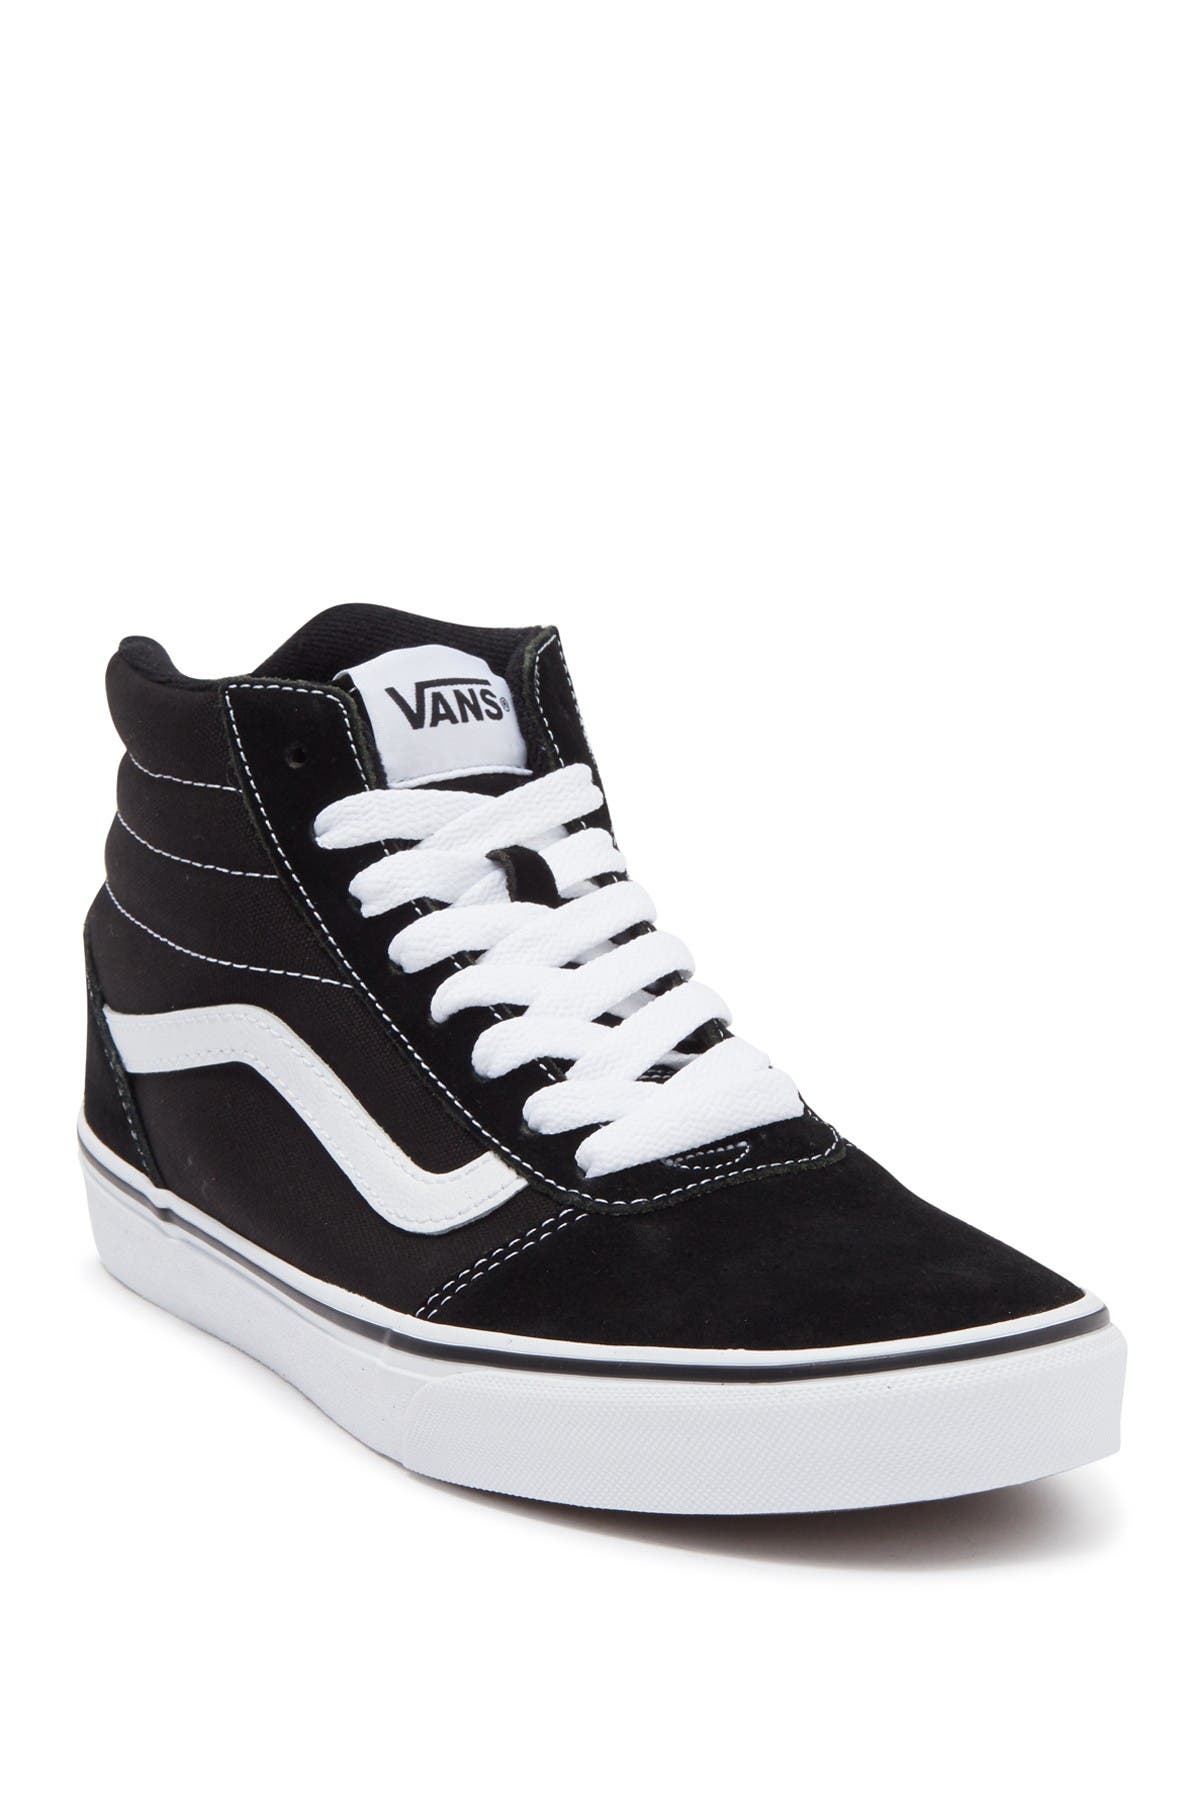 Vans Ward High Top Sneaker In Black